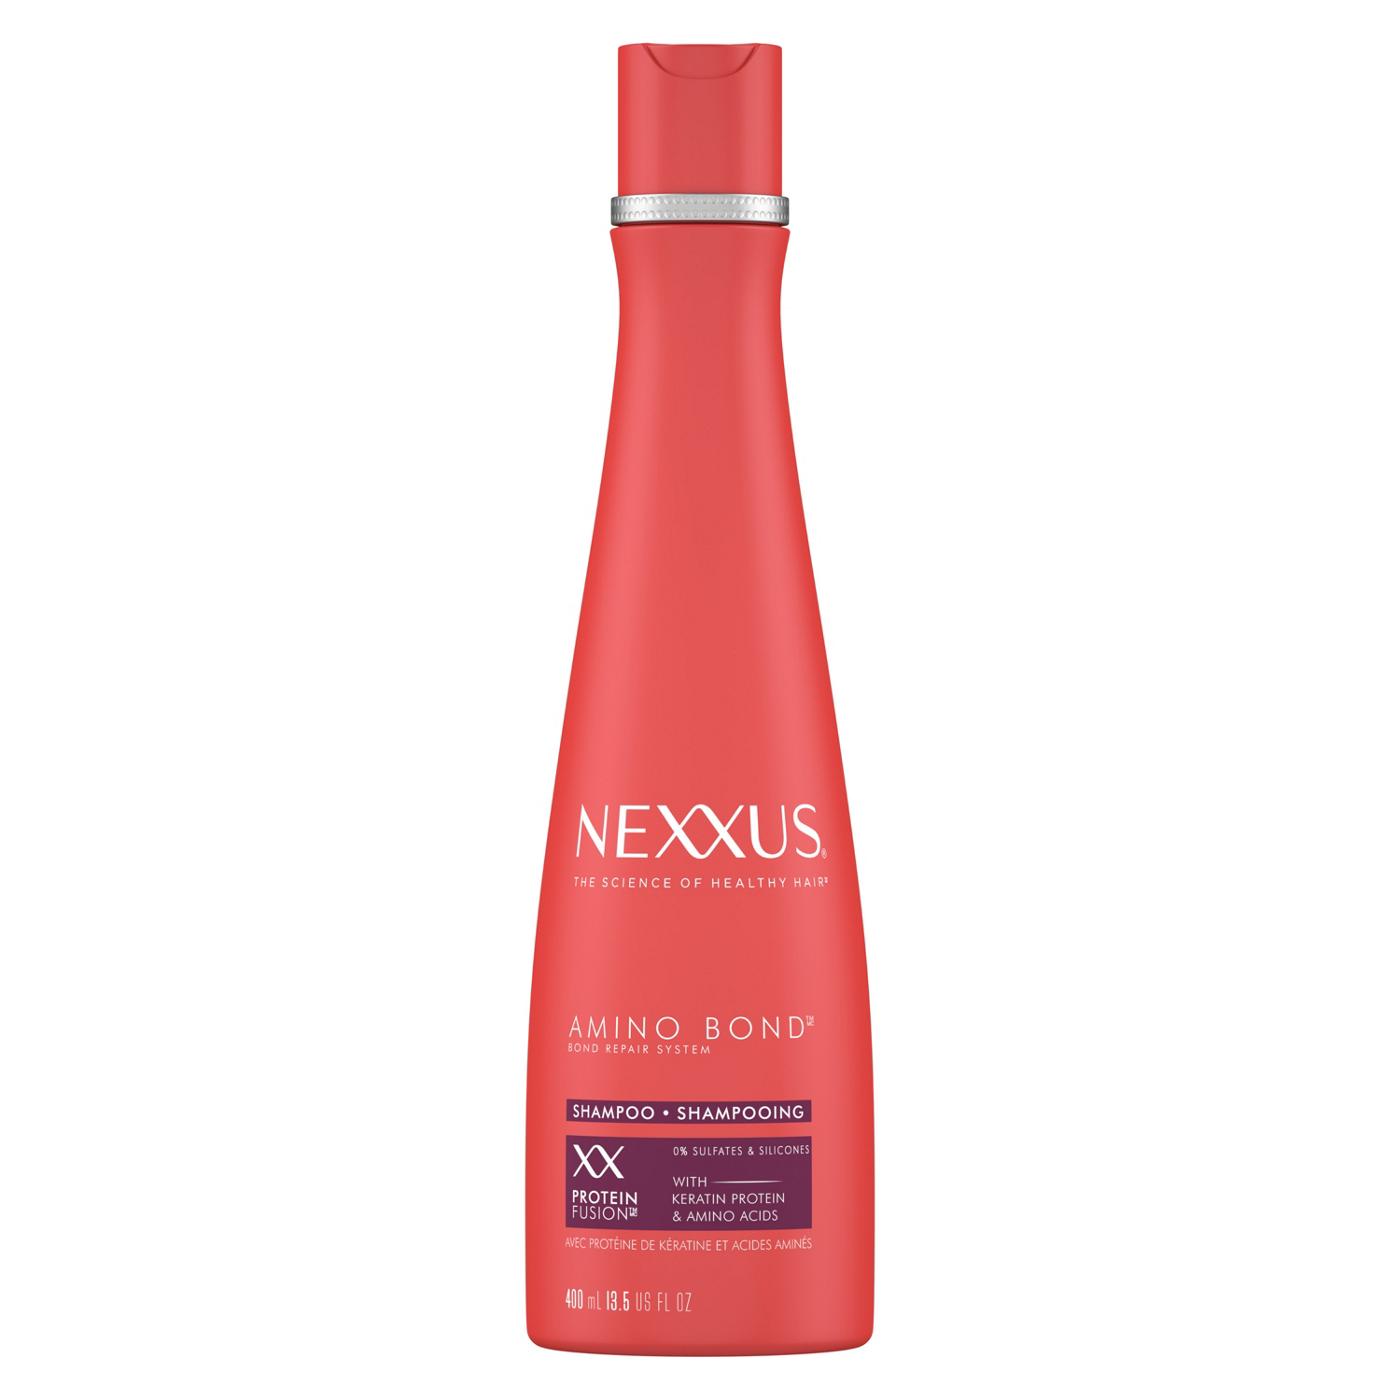 Nexxus Amino Bond Shampoo; image 1 of 3